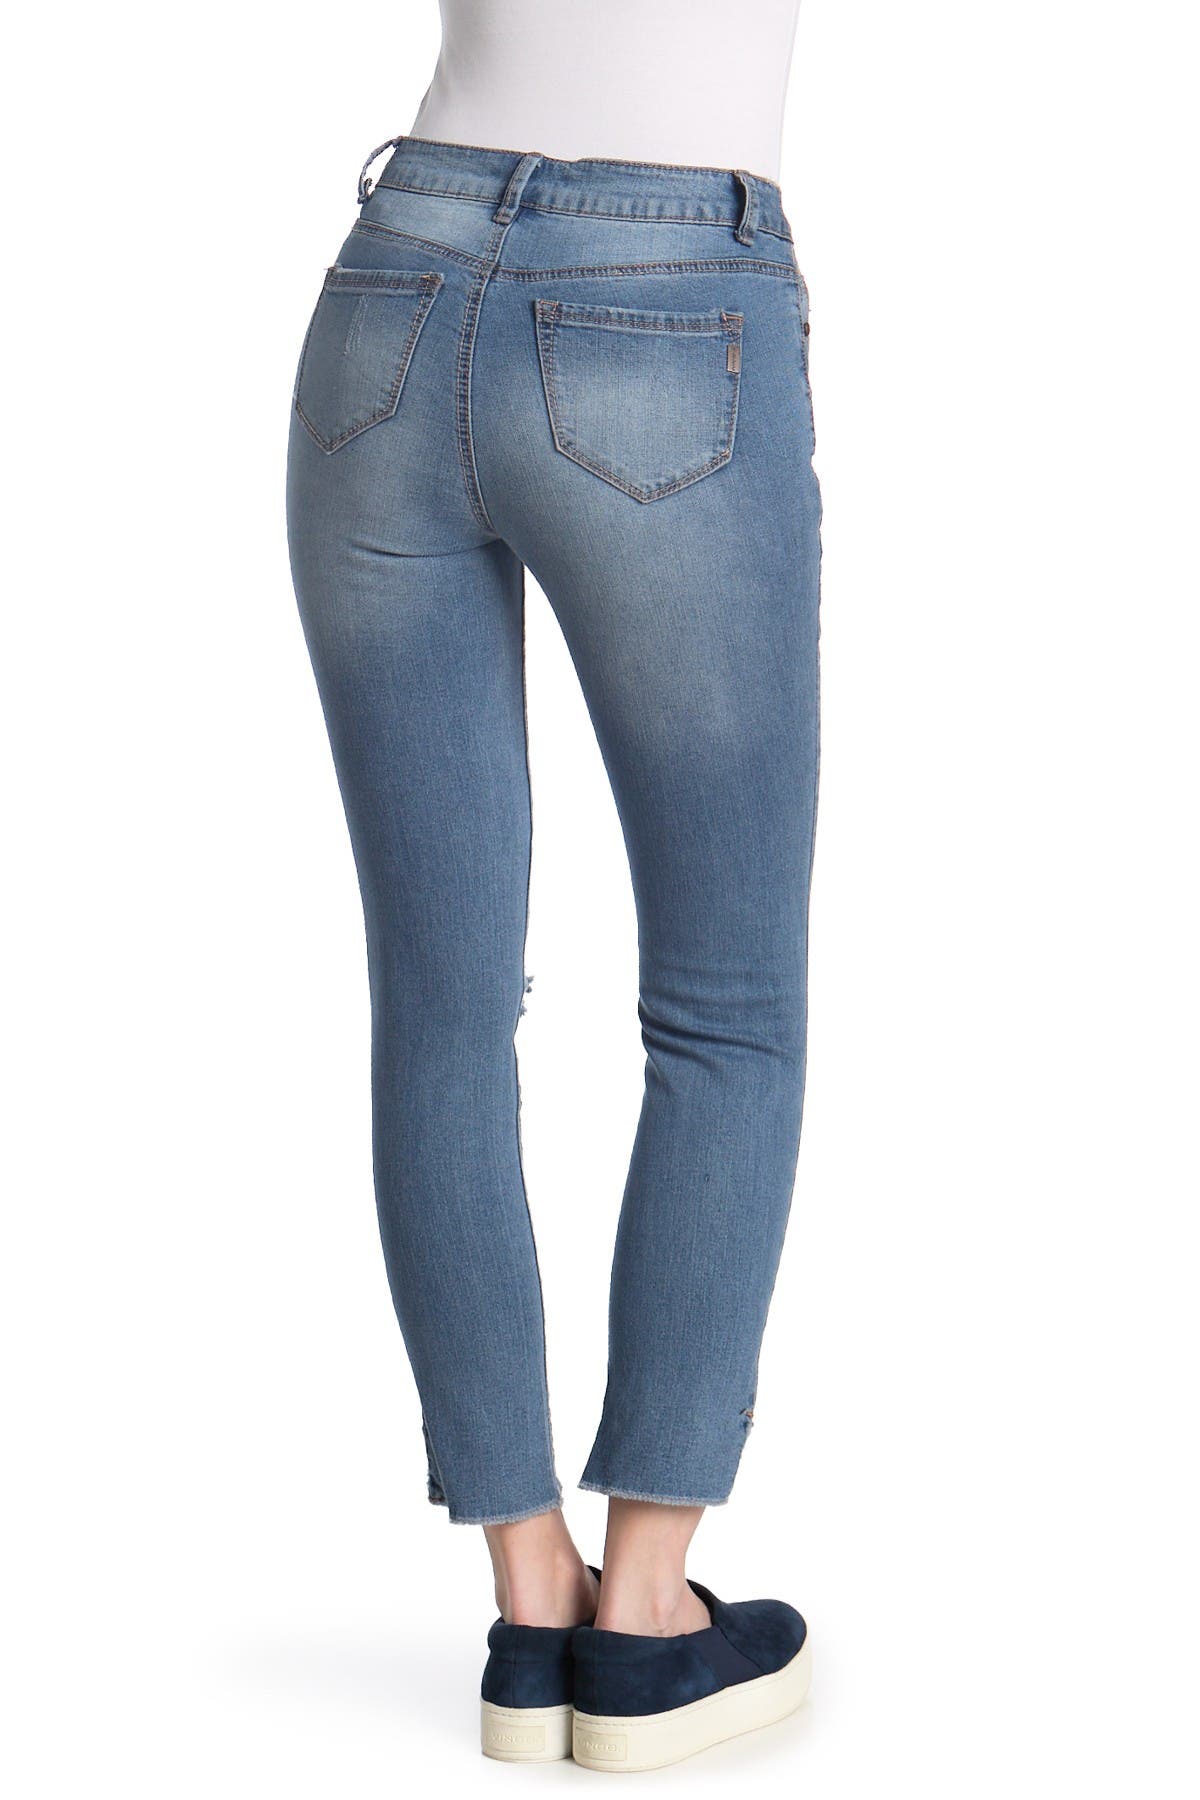 1822 capri jeans